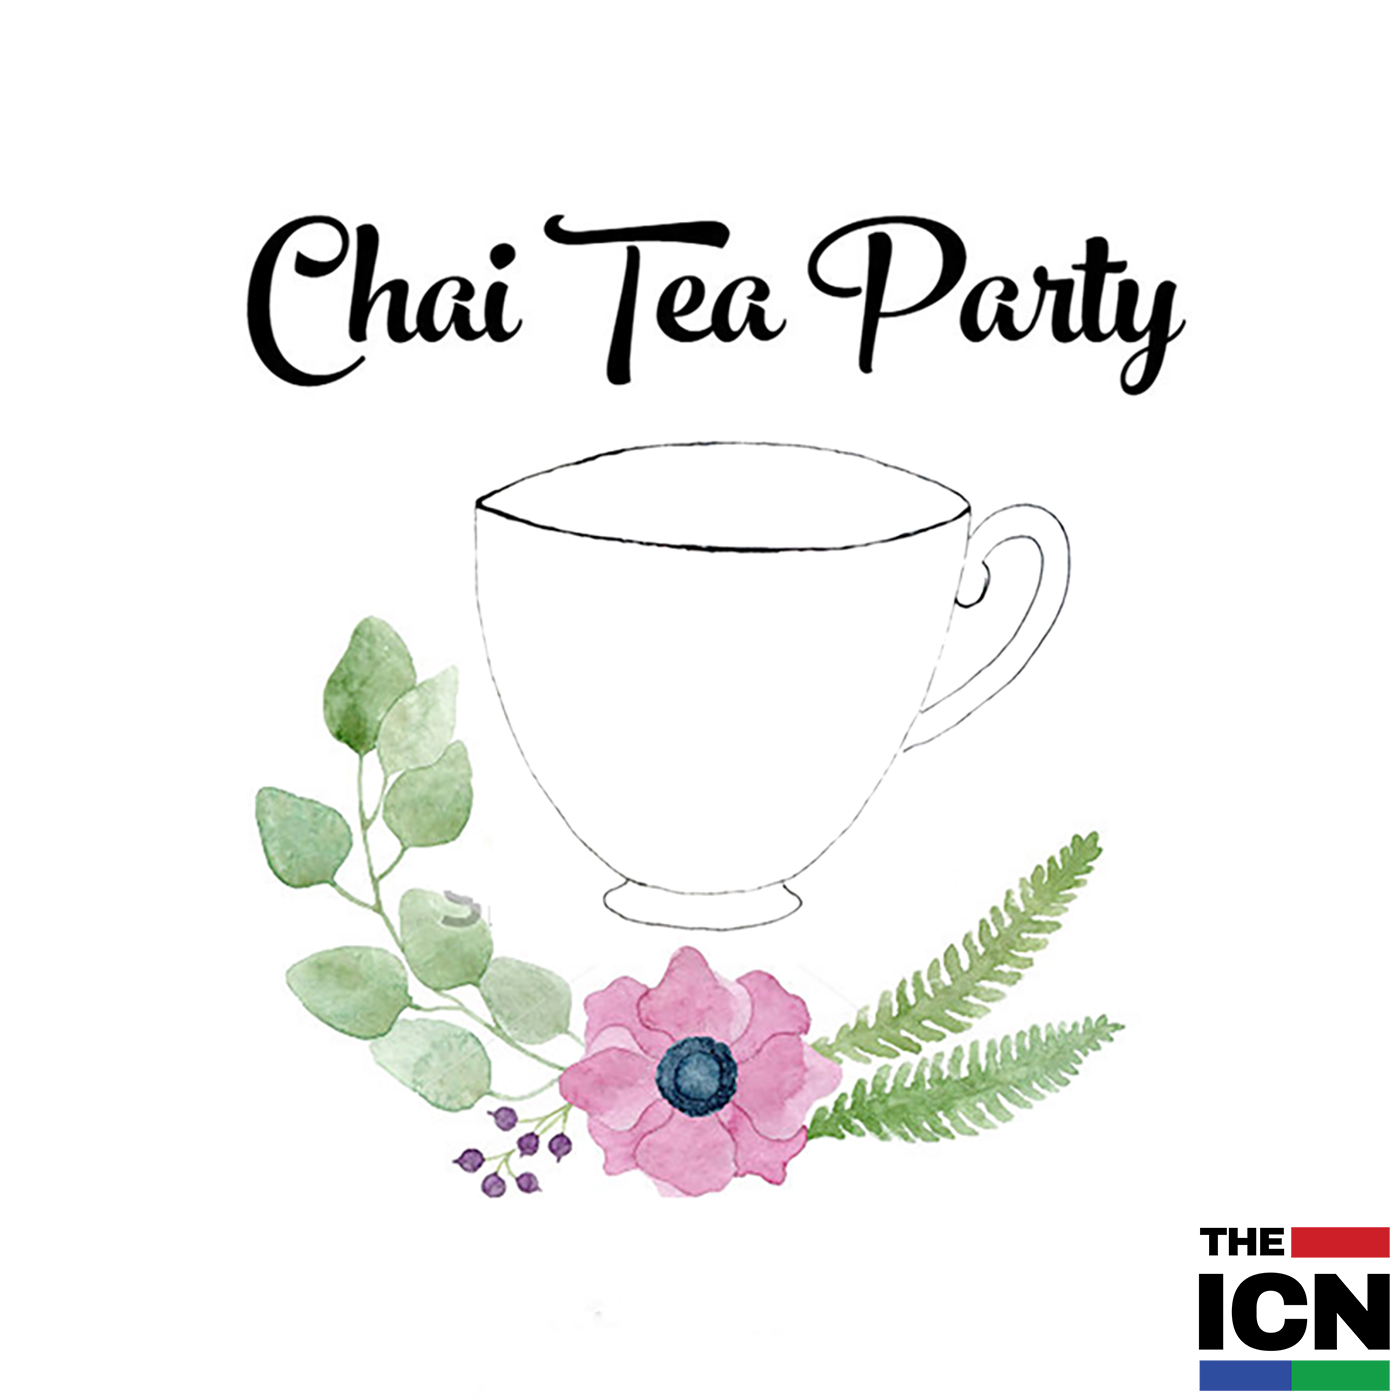 CHAI TEA PARTY